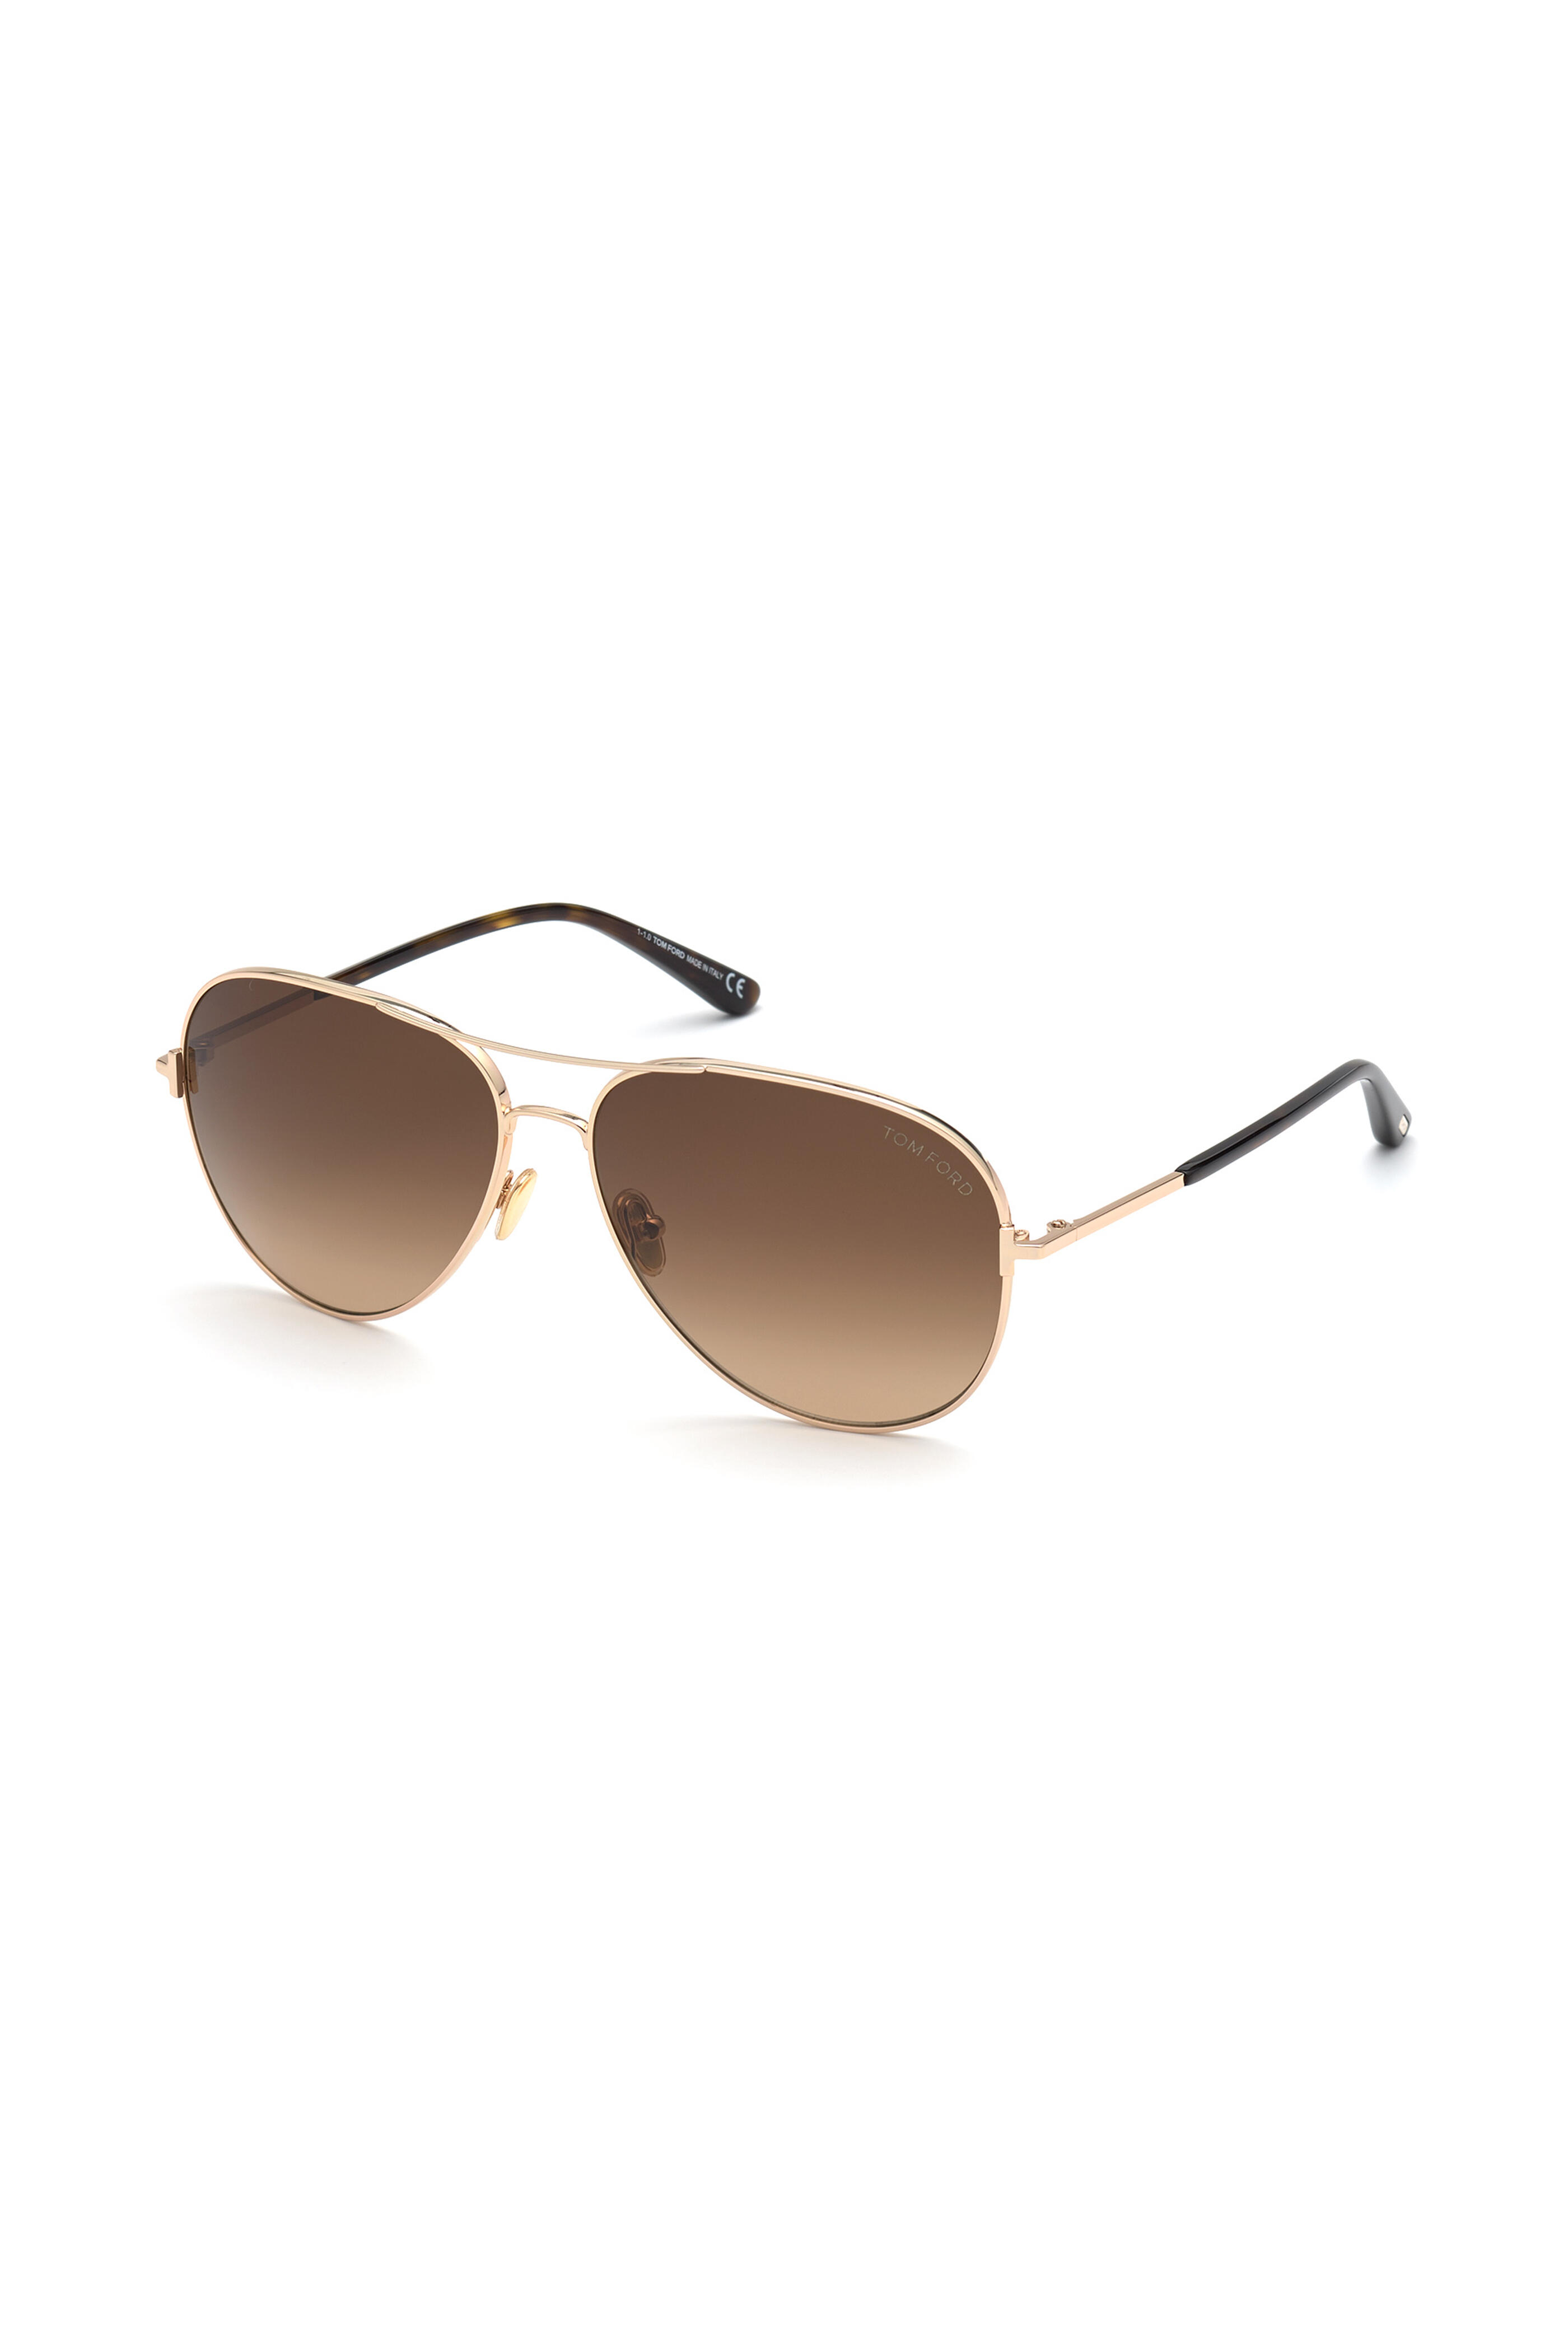 Tom Ford Eyewear - Clark Gold Aviator Sunglasses